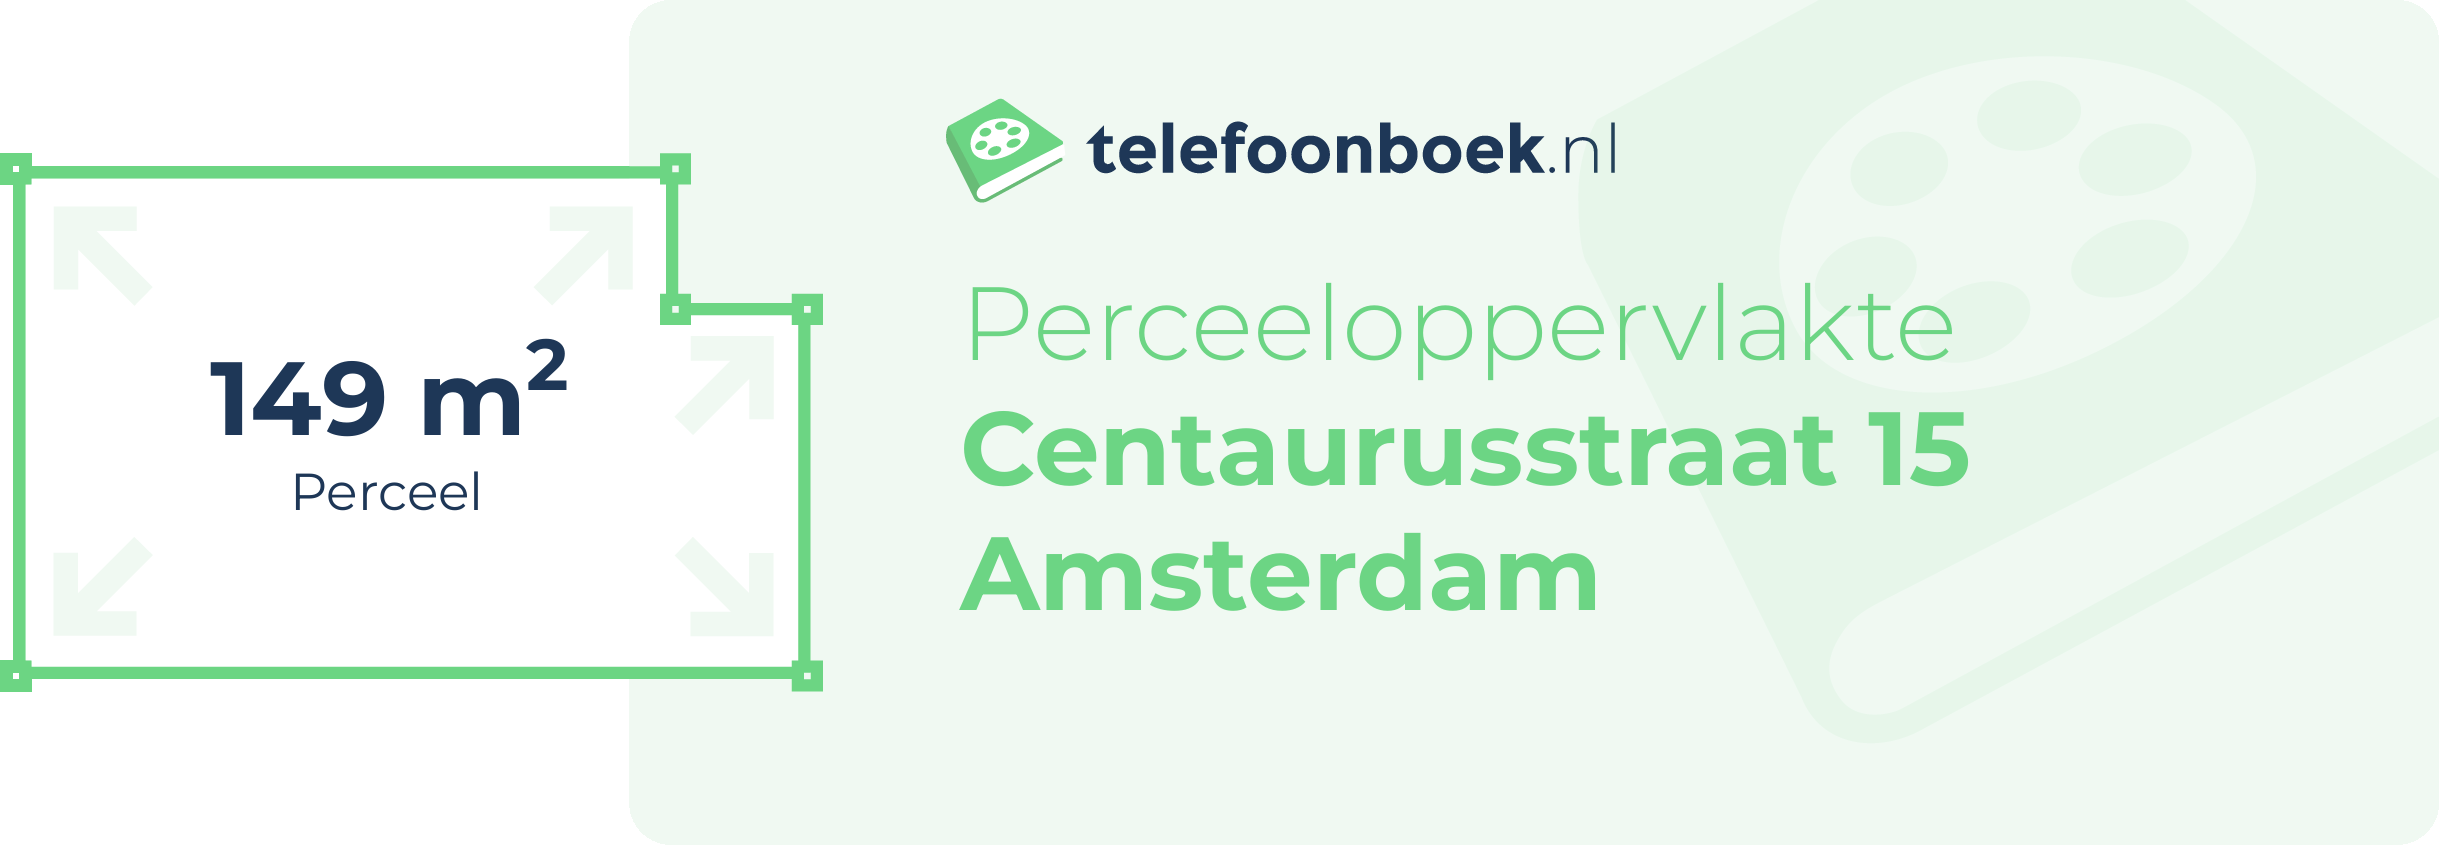 Perceeloppervlakte Centaurusstraat 15 Amsterdam